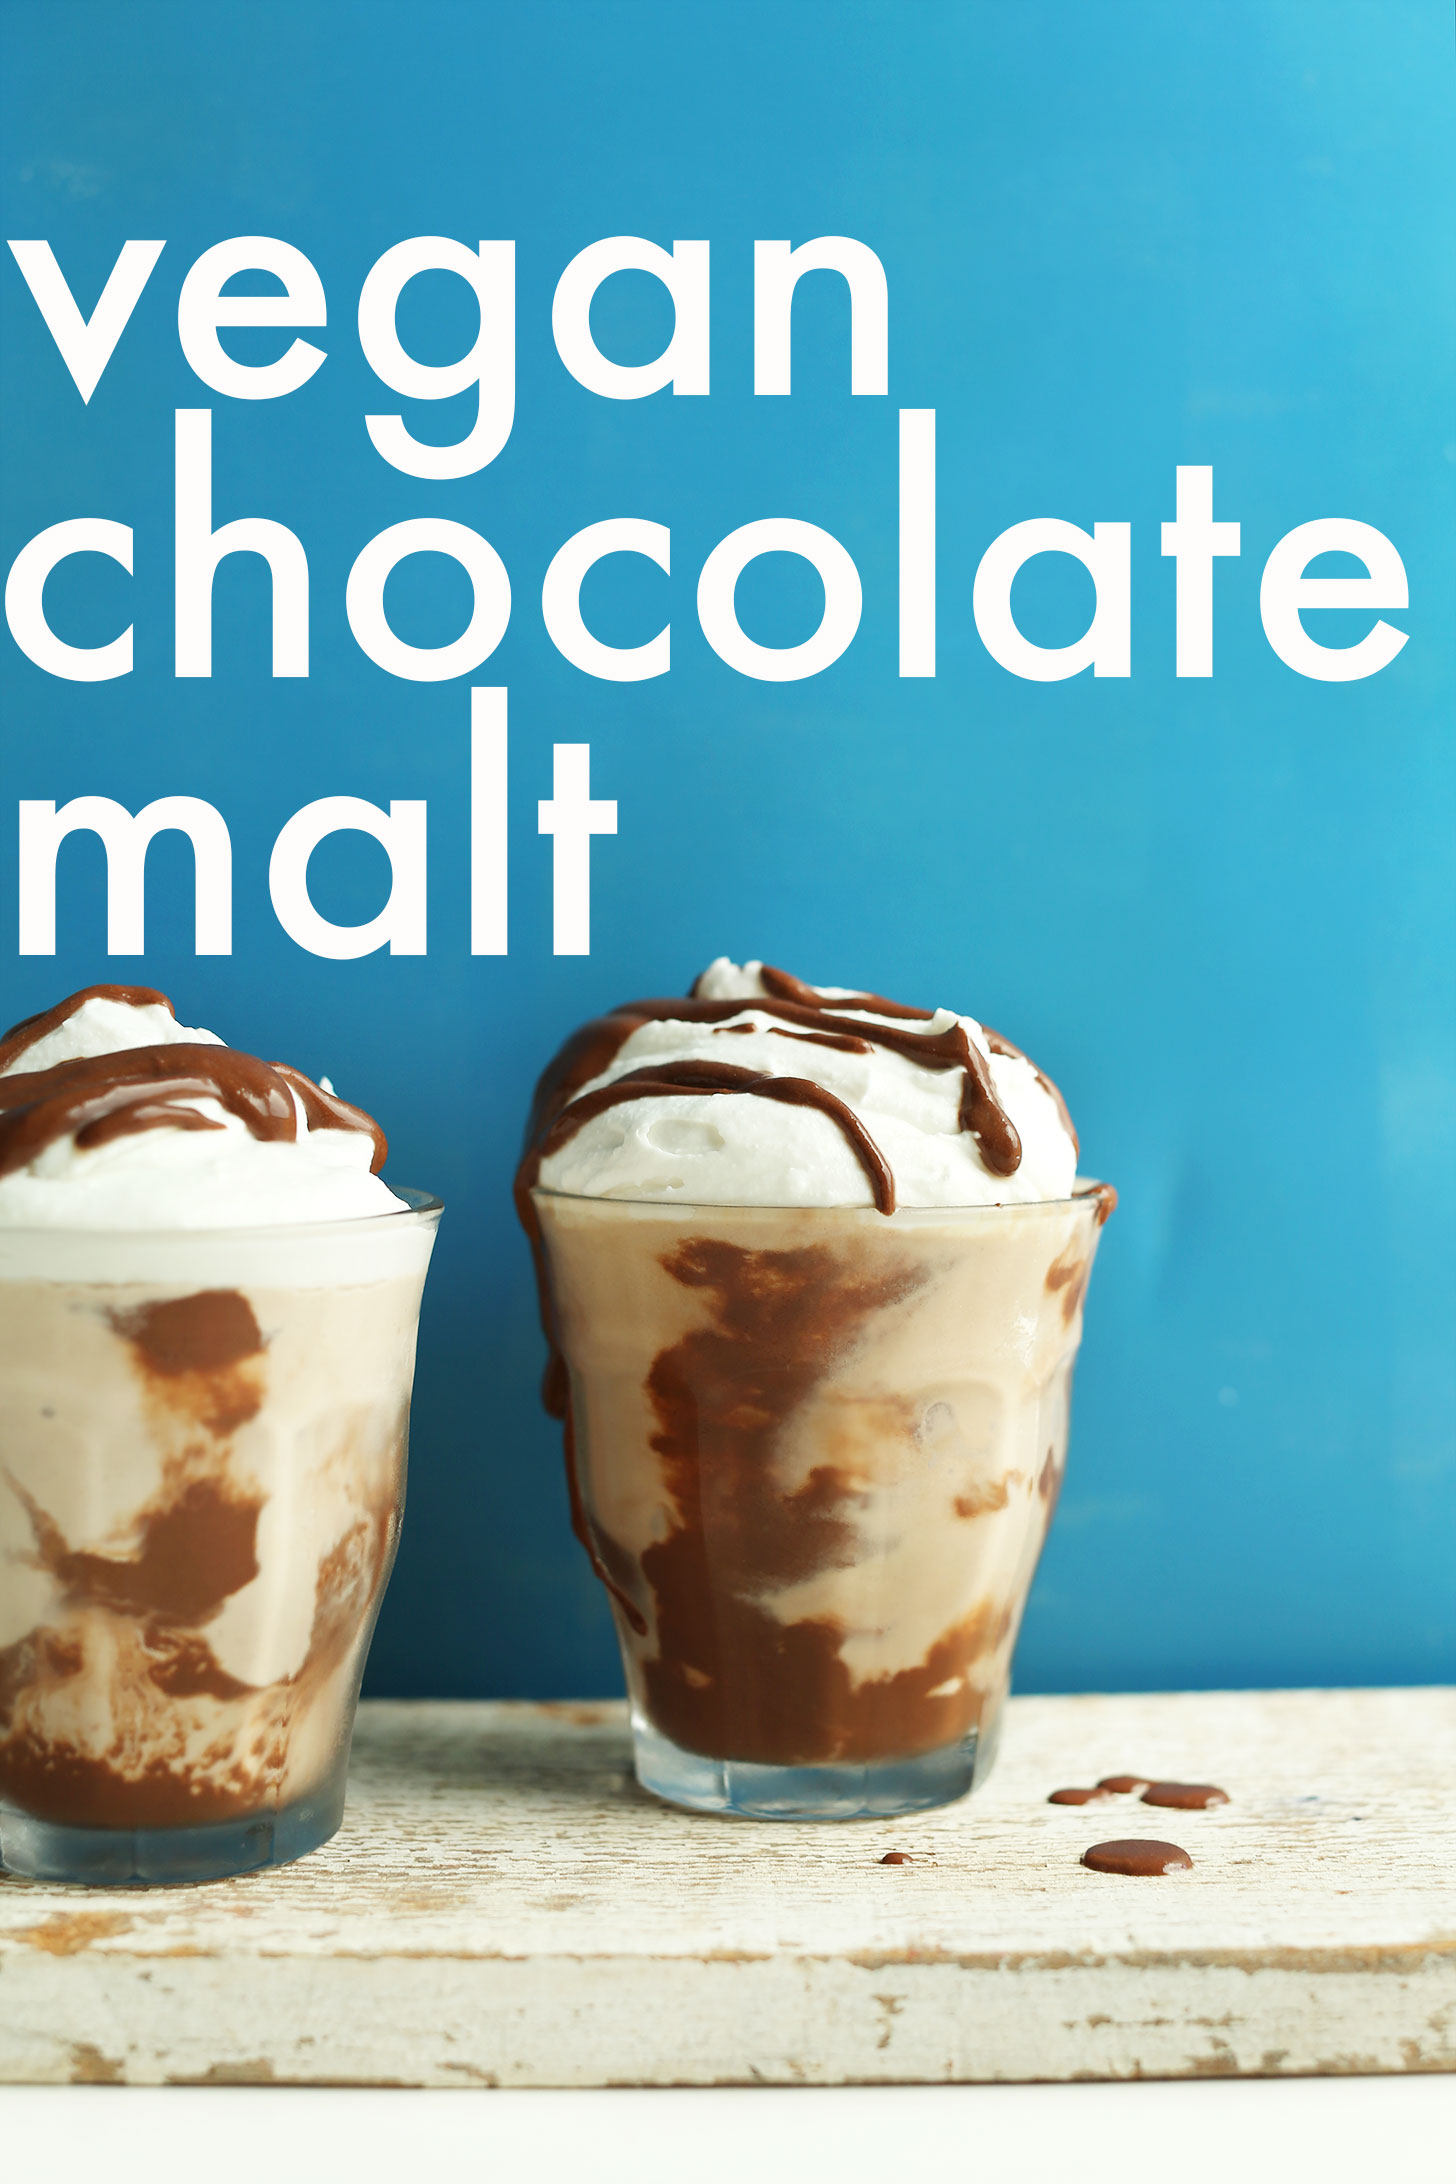 Amazing-vegan-chocolate-malt-in-3-ingredients-vegan-shake-malt-icecream-dessert-recipe-maca-chocolate